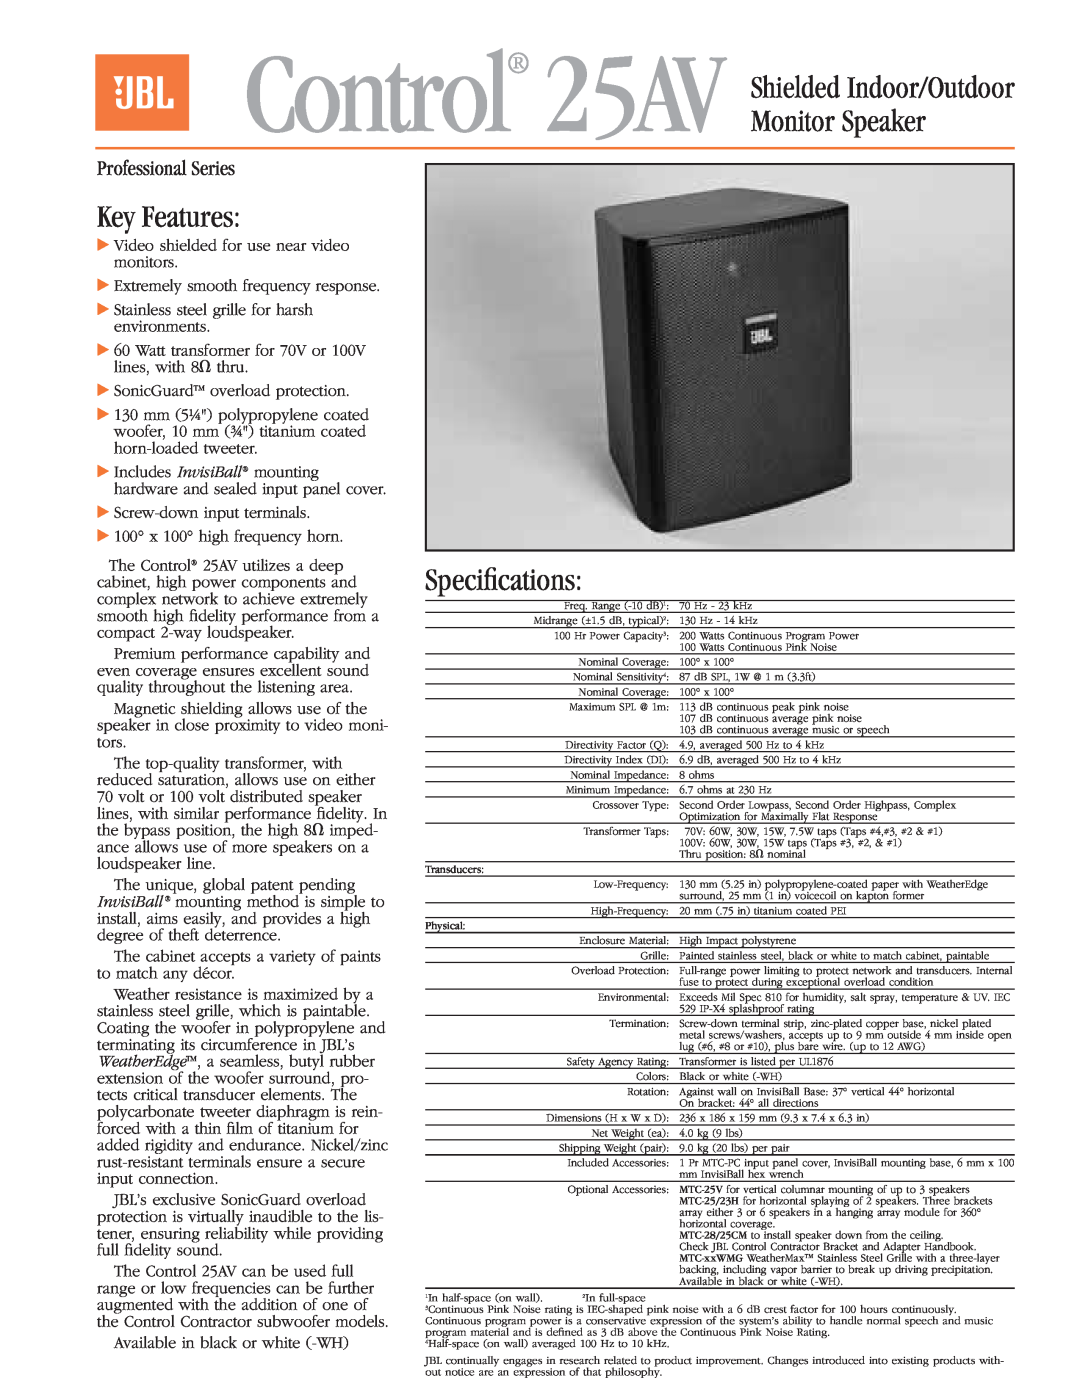 JBL CONTROL-25AV-WH specifications Monitor Speaker, Key Features, Speciﬁcations, Control 25AV Shielded Indoor/Outdoor 